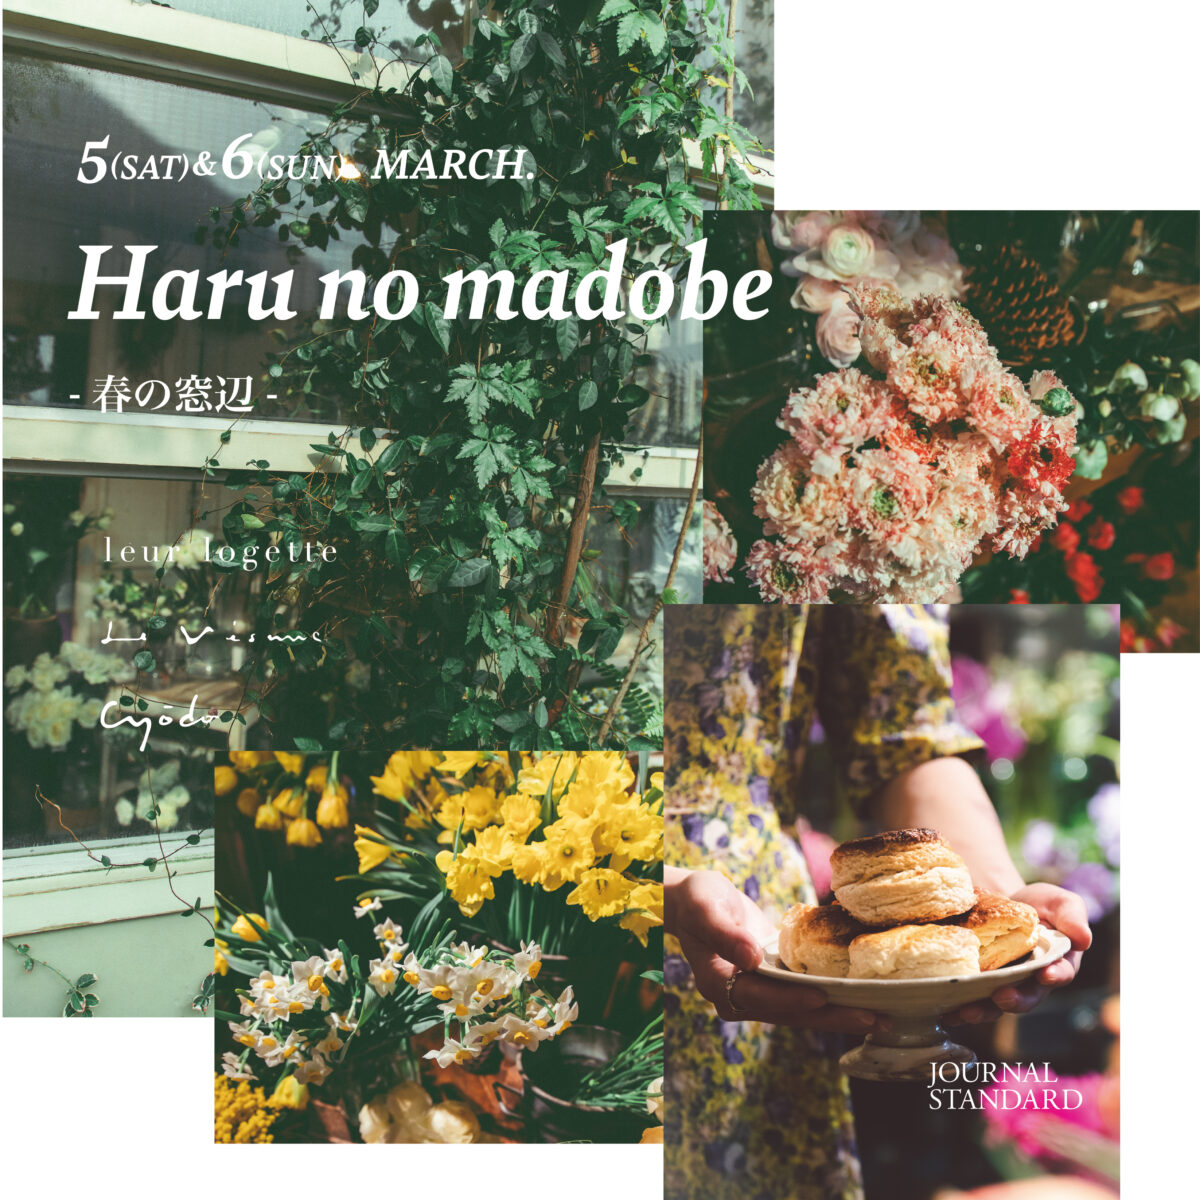 leur logetteがPOP UP STORE「Haru no madobe - 春の窓辺 -」を期間限定でオープン！